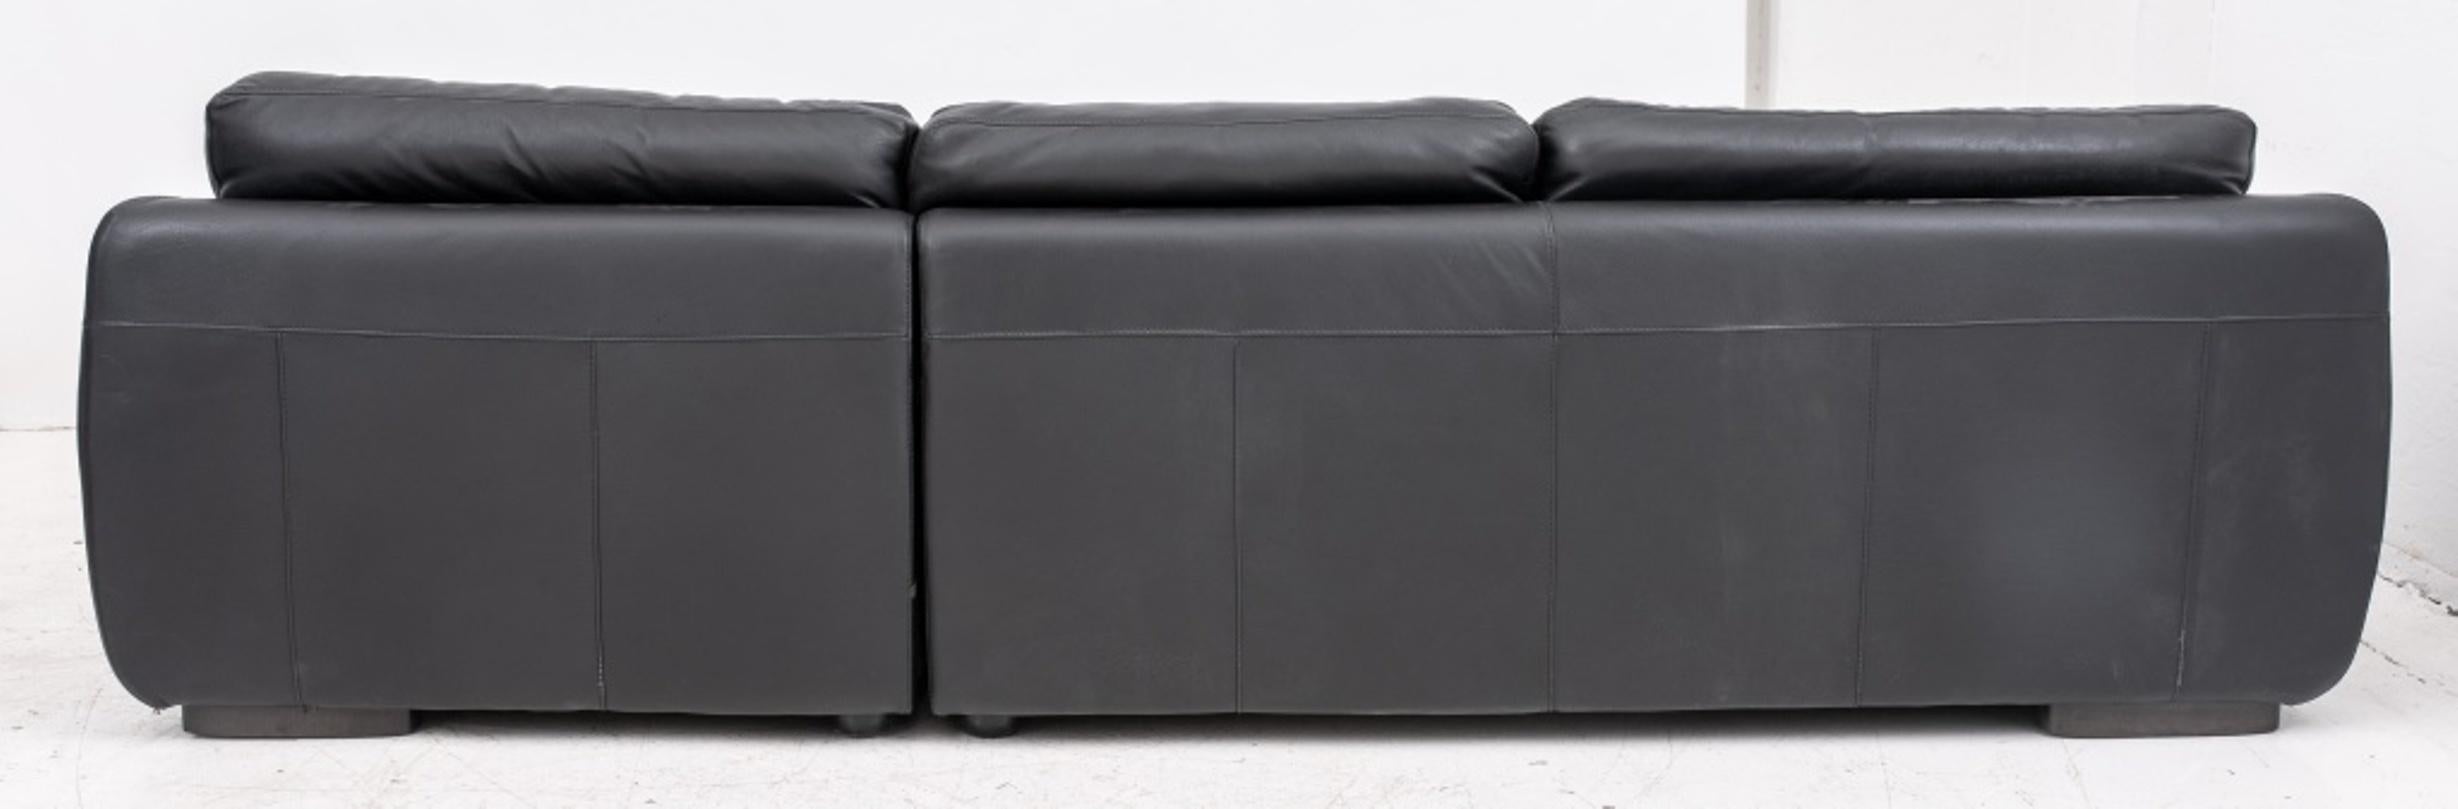 Modern Italian Natuzzi Black Leather Sectional Sofa